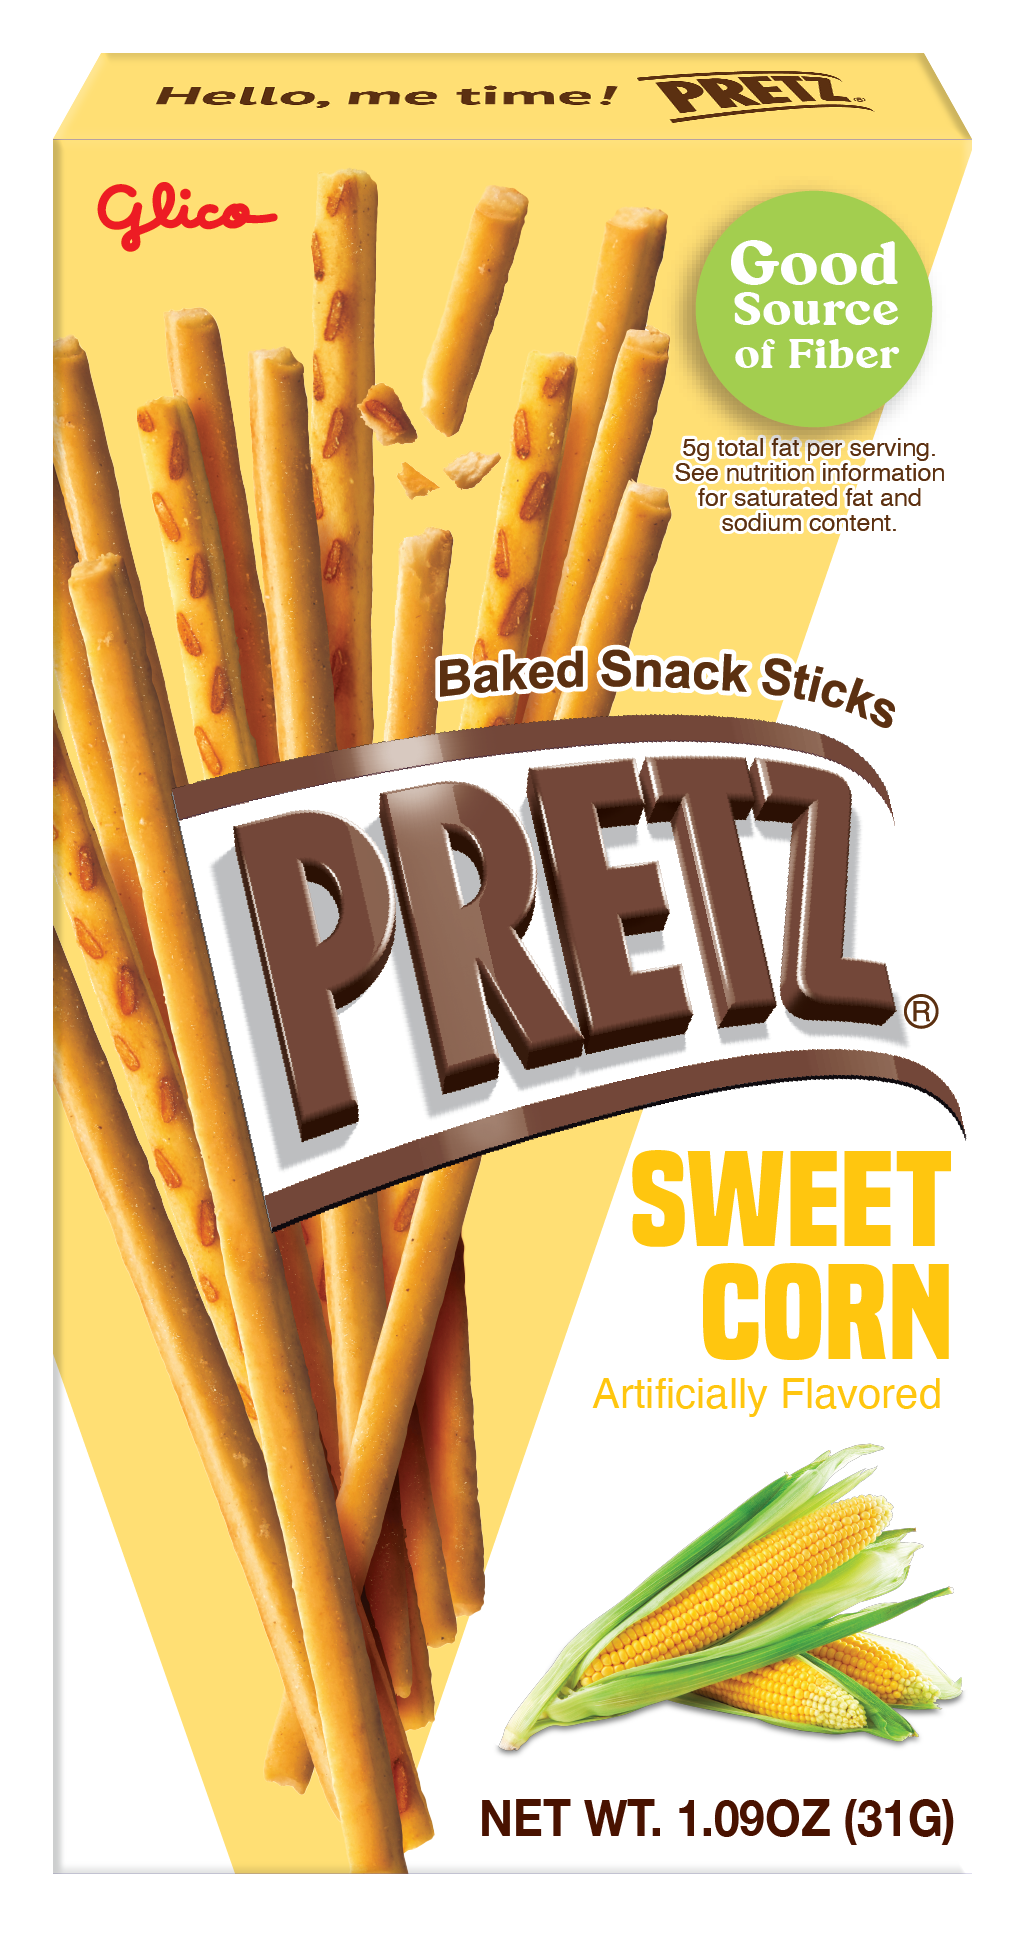 Glico Pretz Sweet Corn - 31g